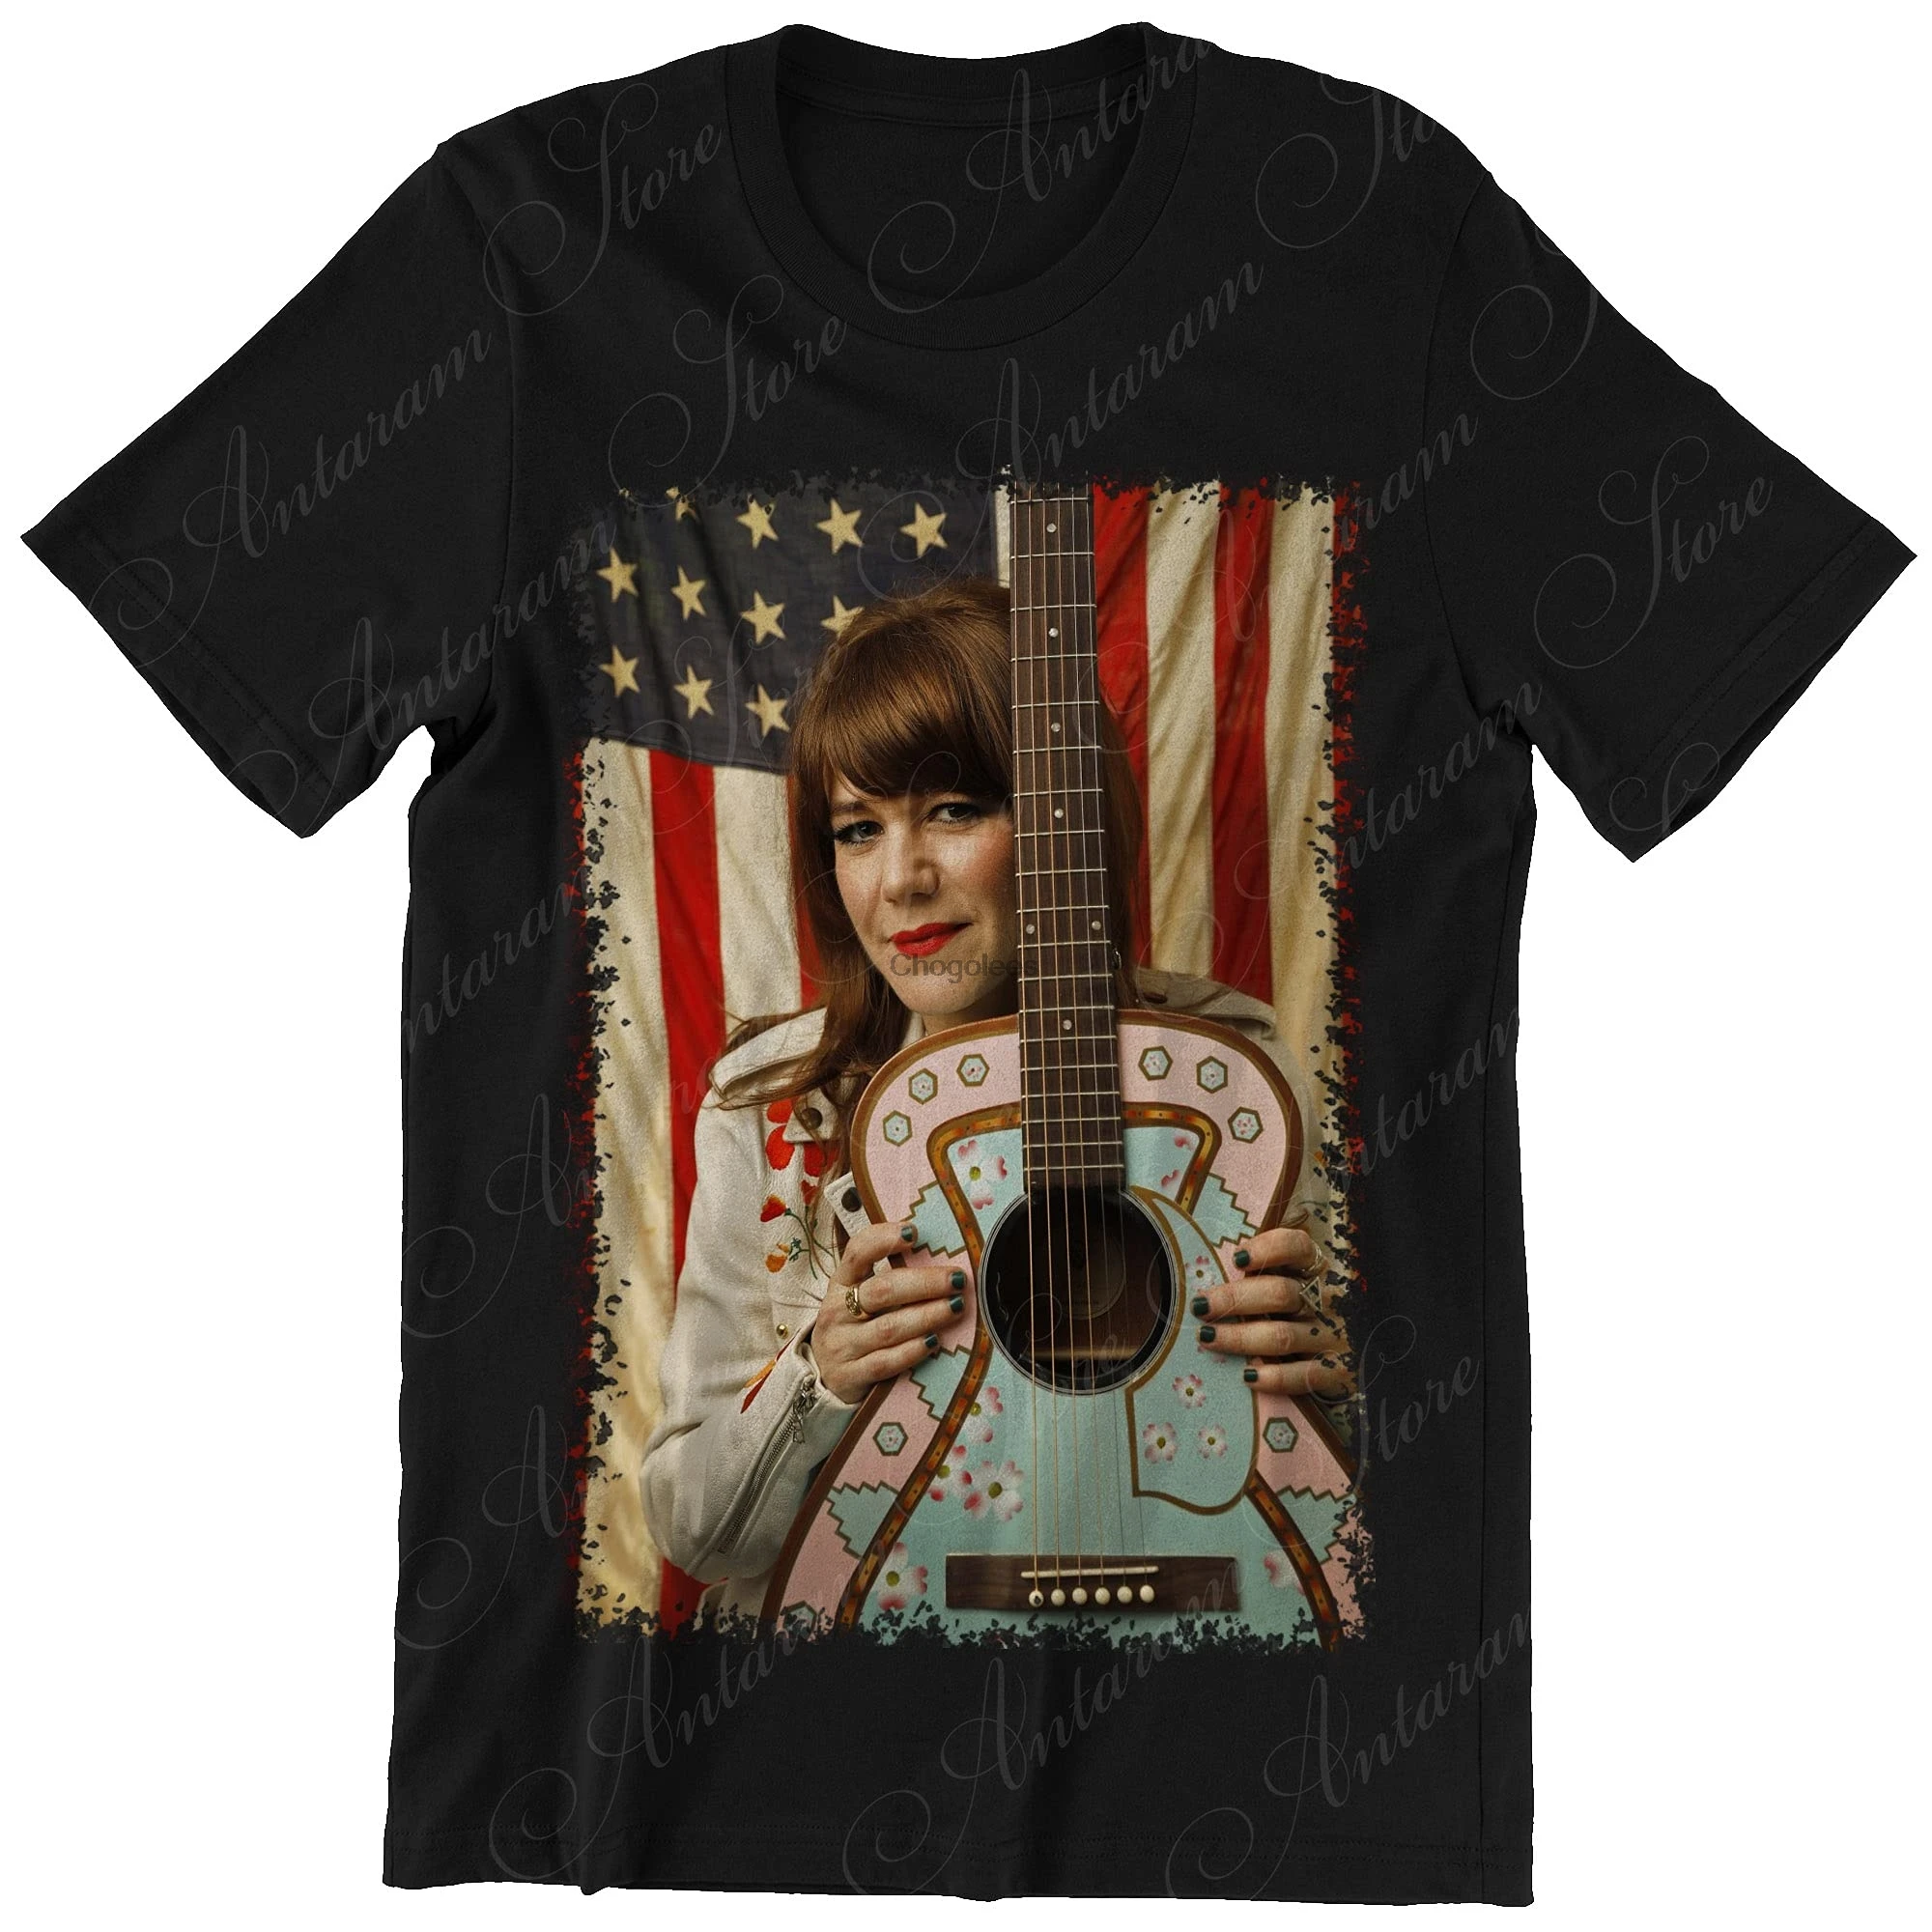 Рубашка с американским флагом Дженни Льюис в стиле ретро |